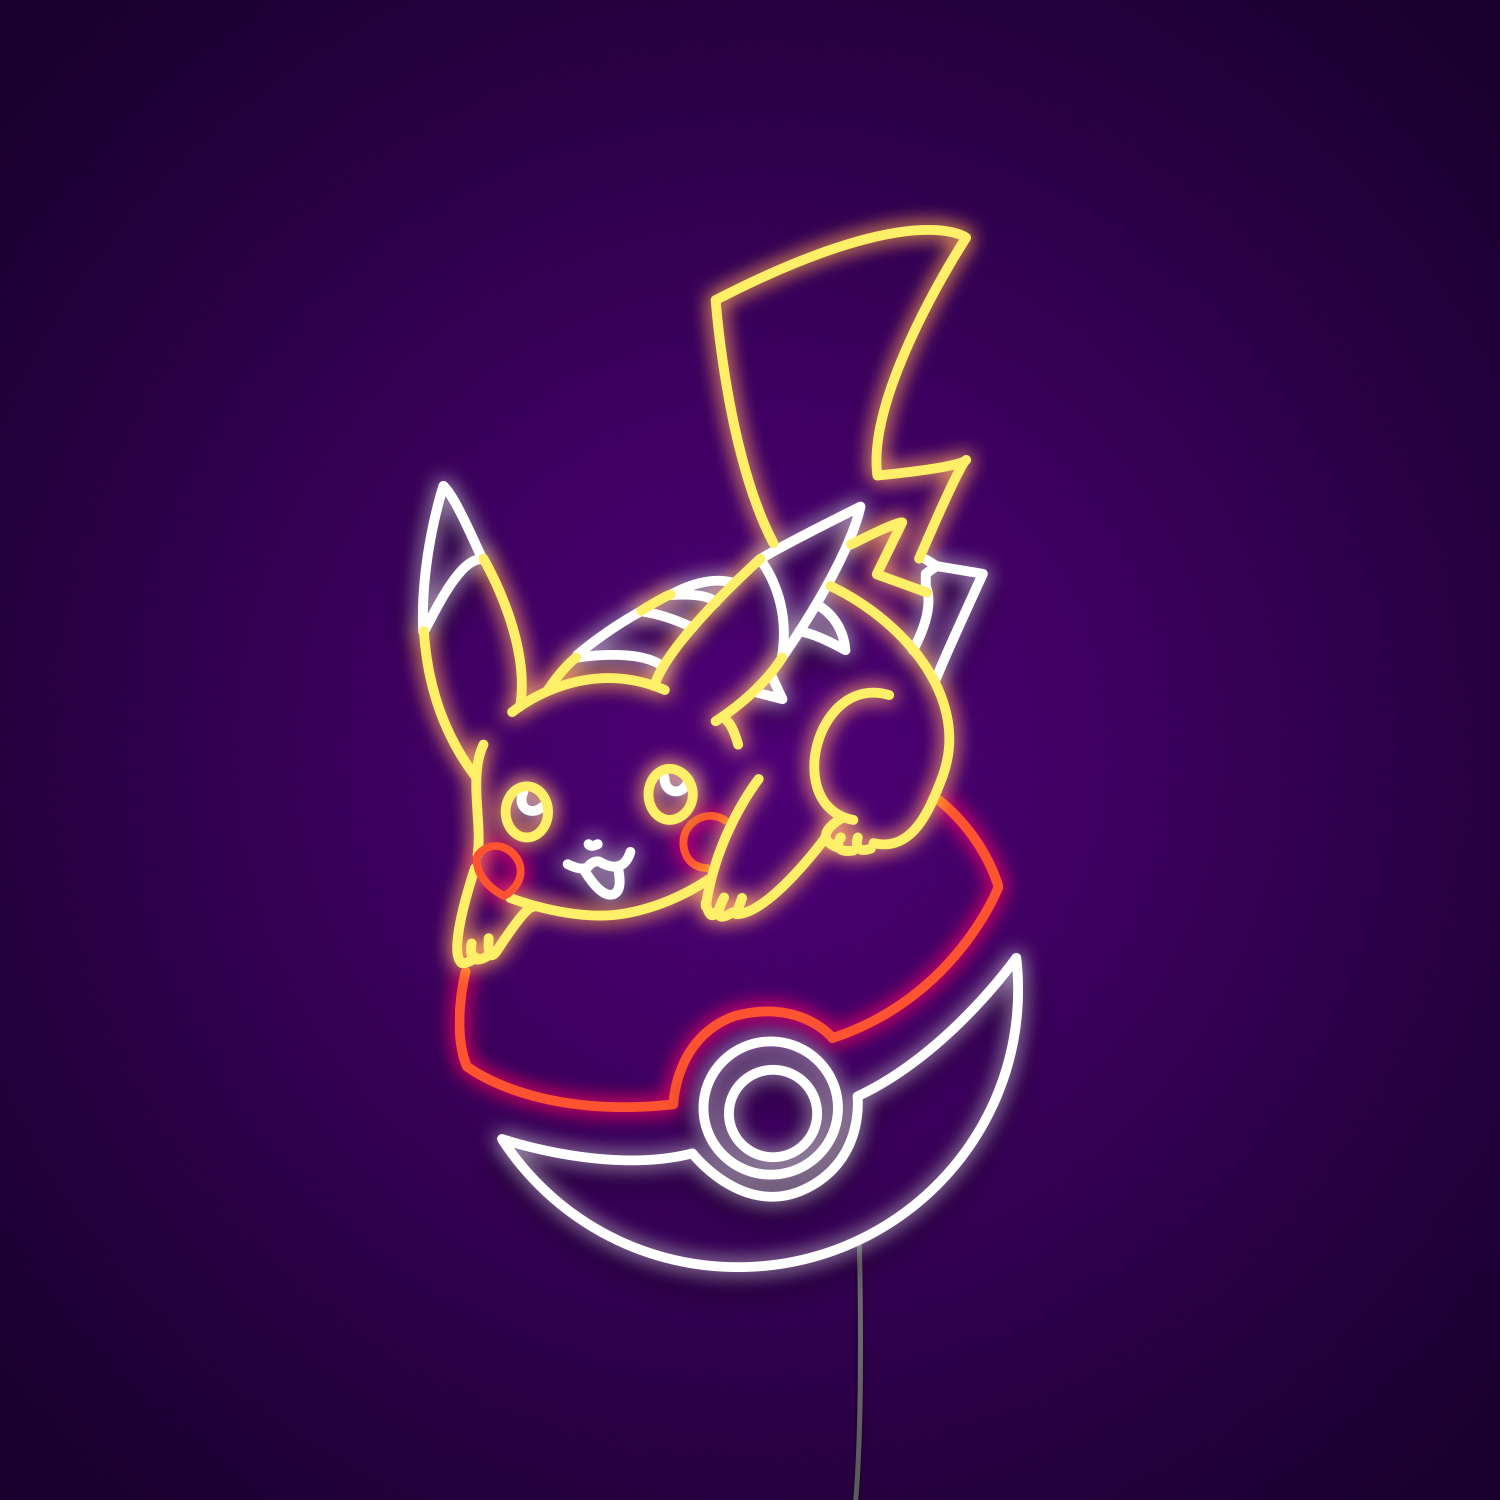 Pikachu On Pokeball Pokemon Neon Sign Neonize